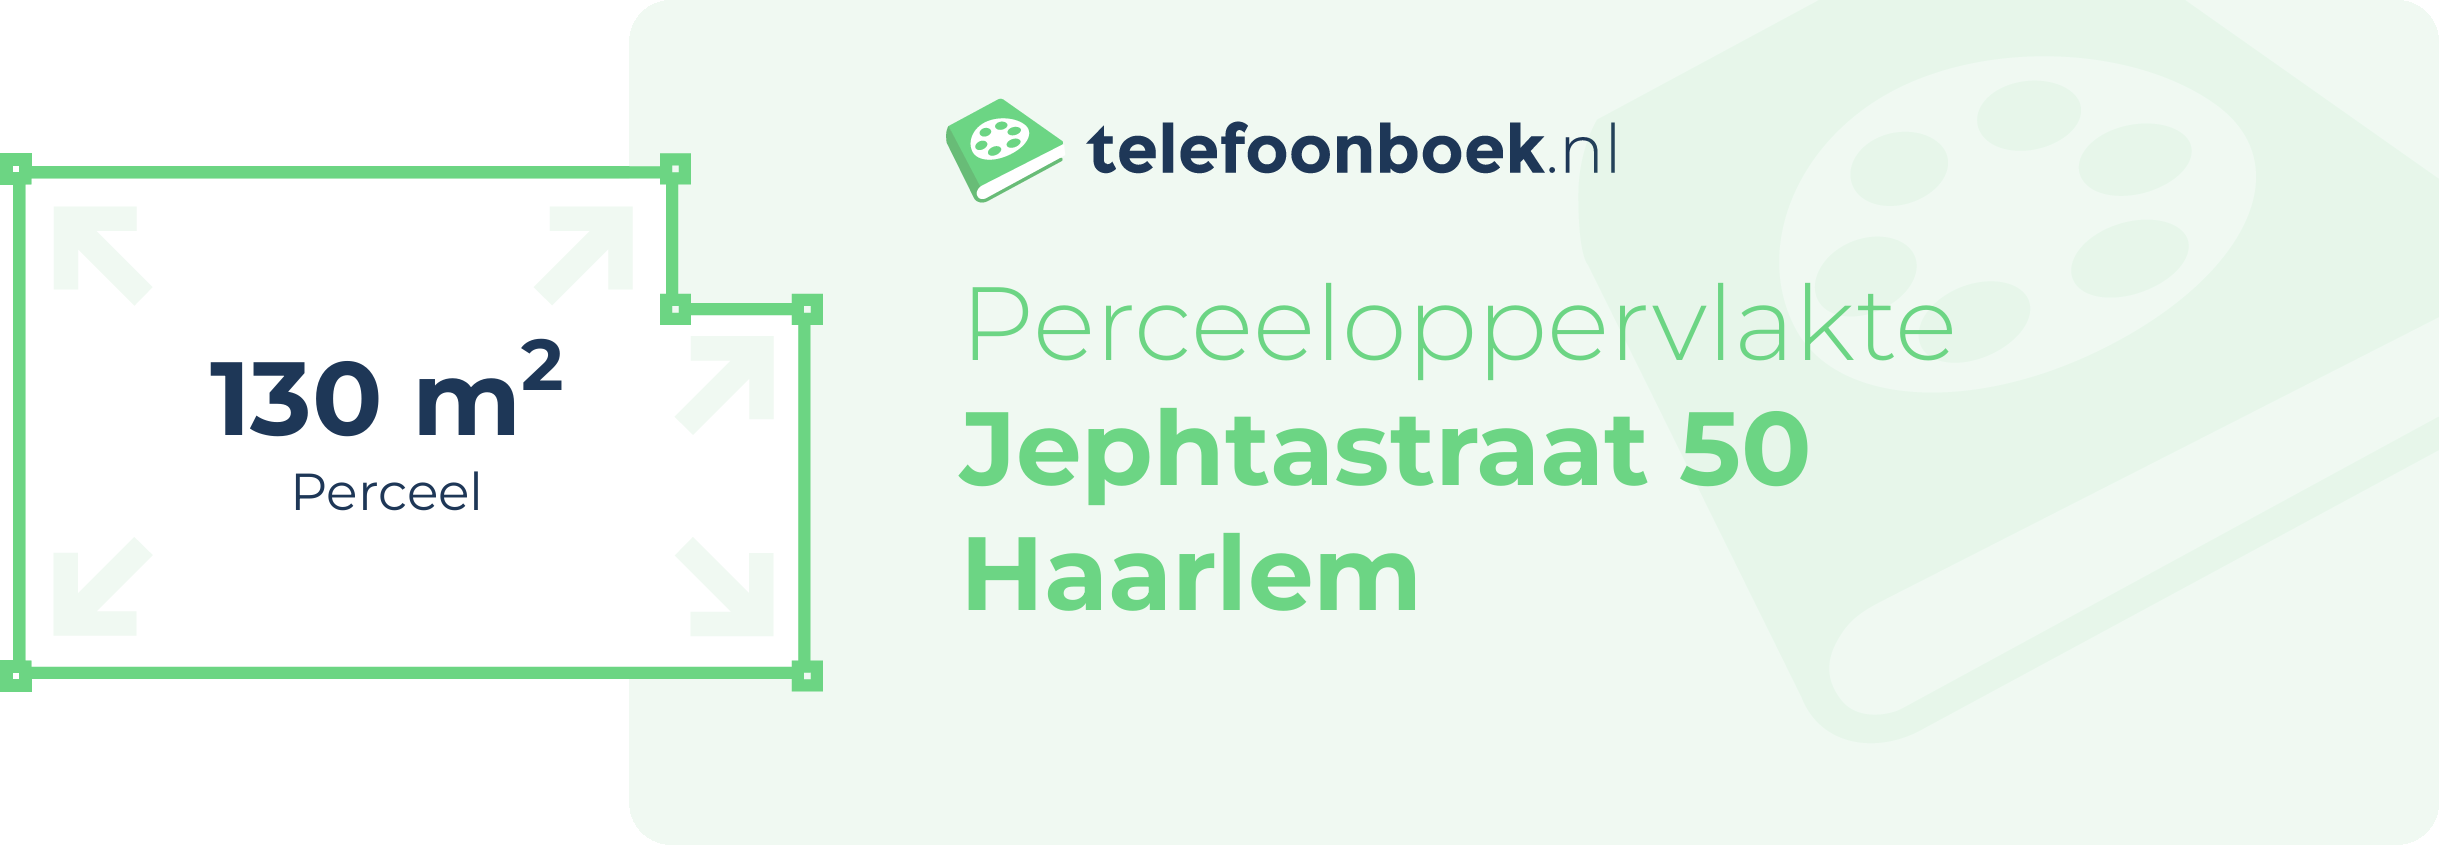 Perceeloppervlakte Jephtastraat 50 Haarlem